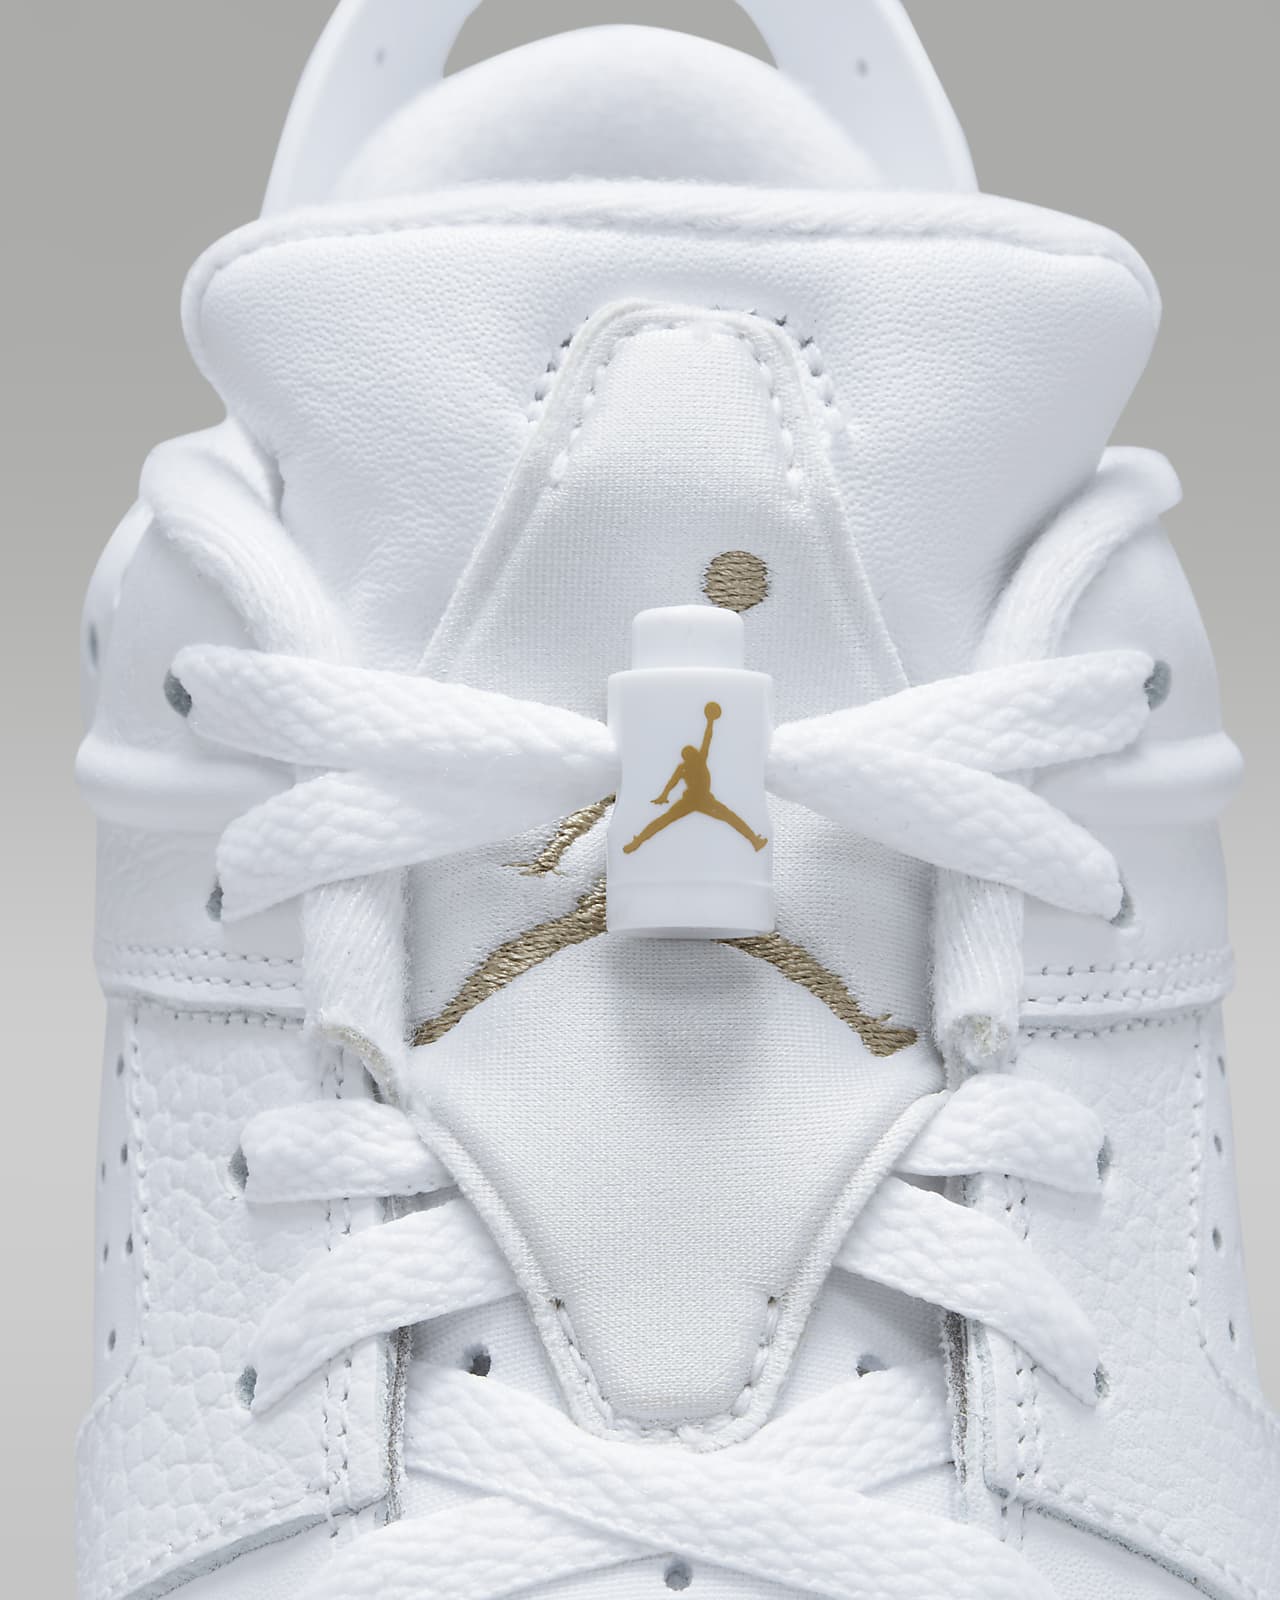 Air Jordan 1 Golf Shoe Release Date Info  SneakerNewscom